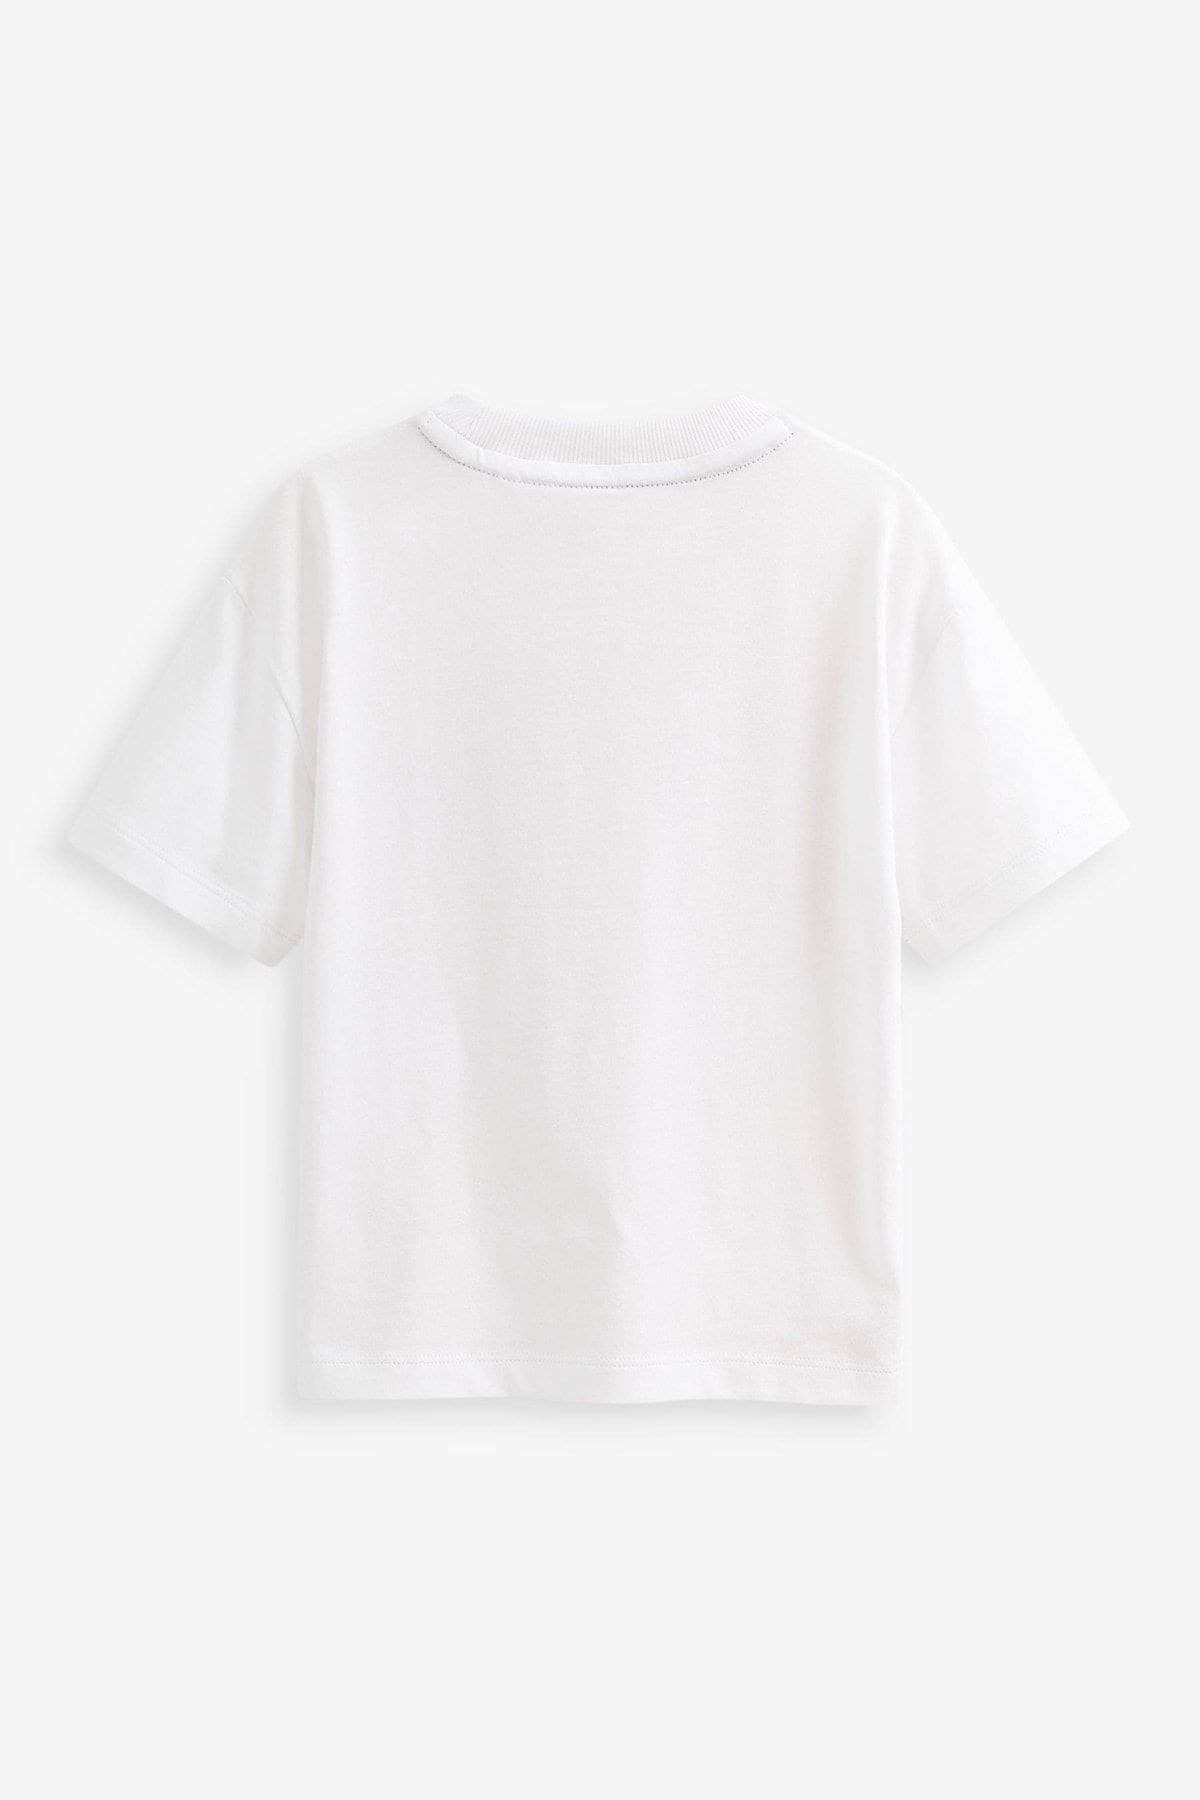 Next Baby تی شرت سفید چاپ شده با کاراکتر کنجدی 100% پنبه ای کودکان